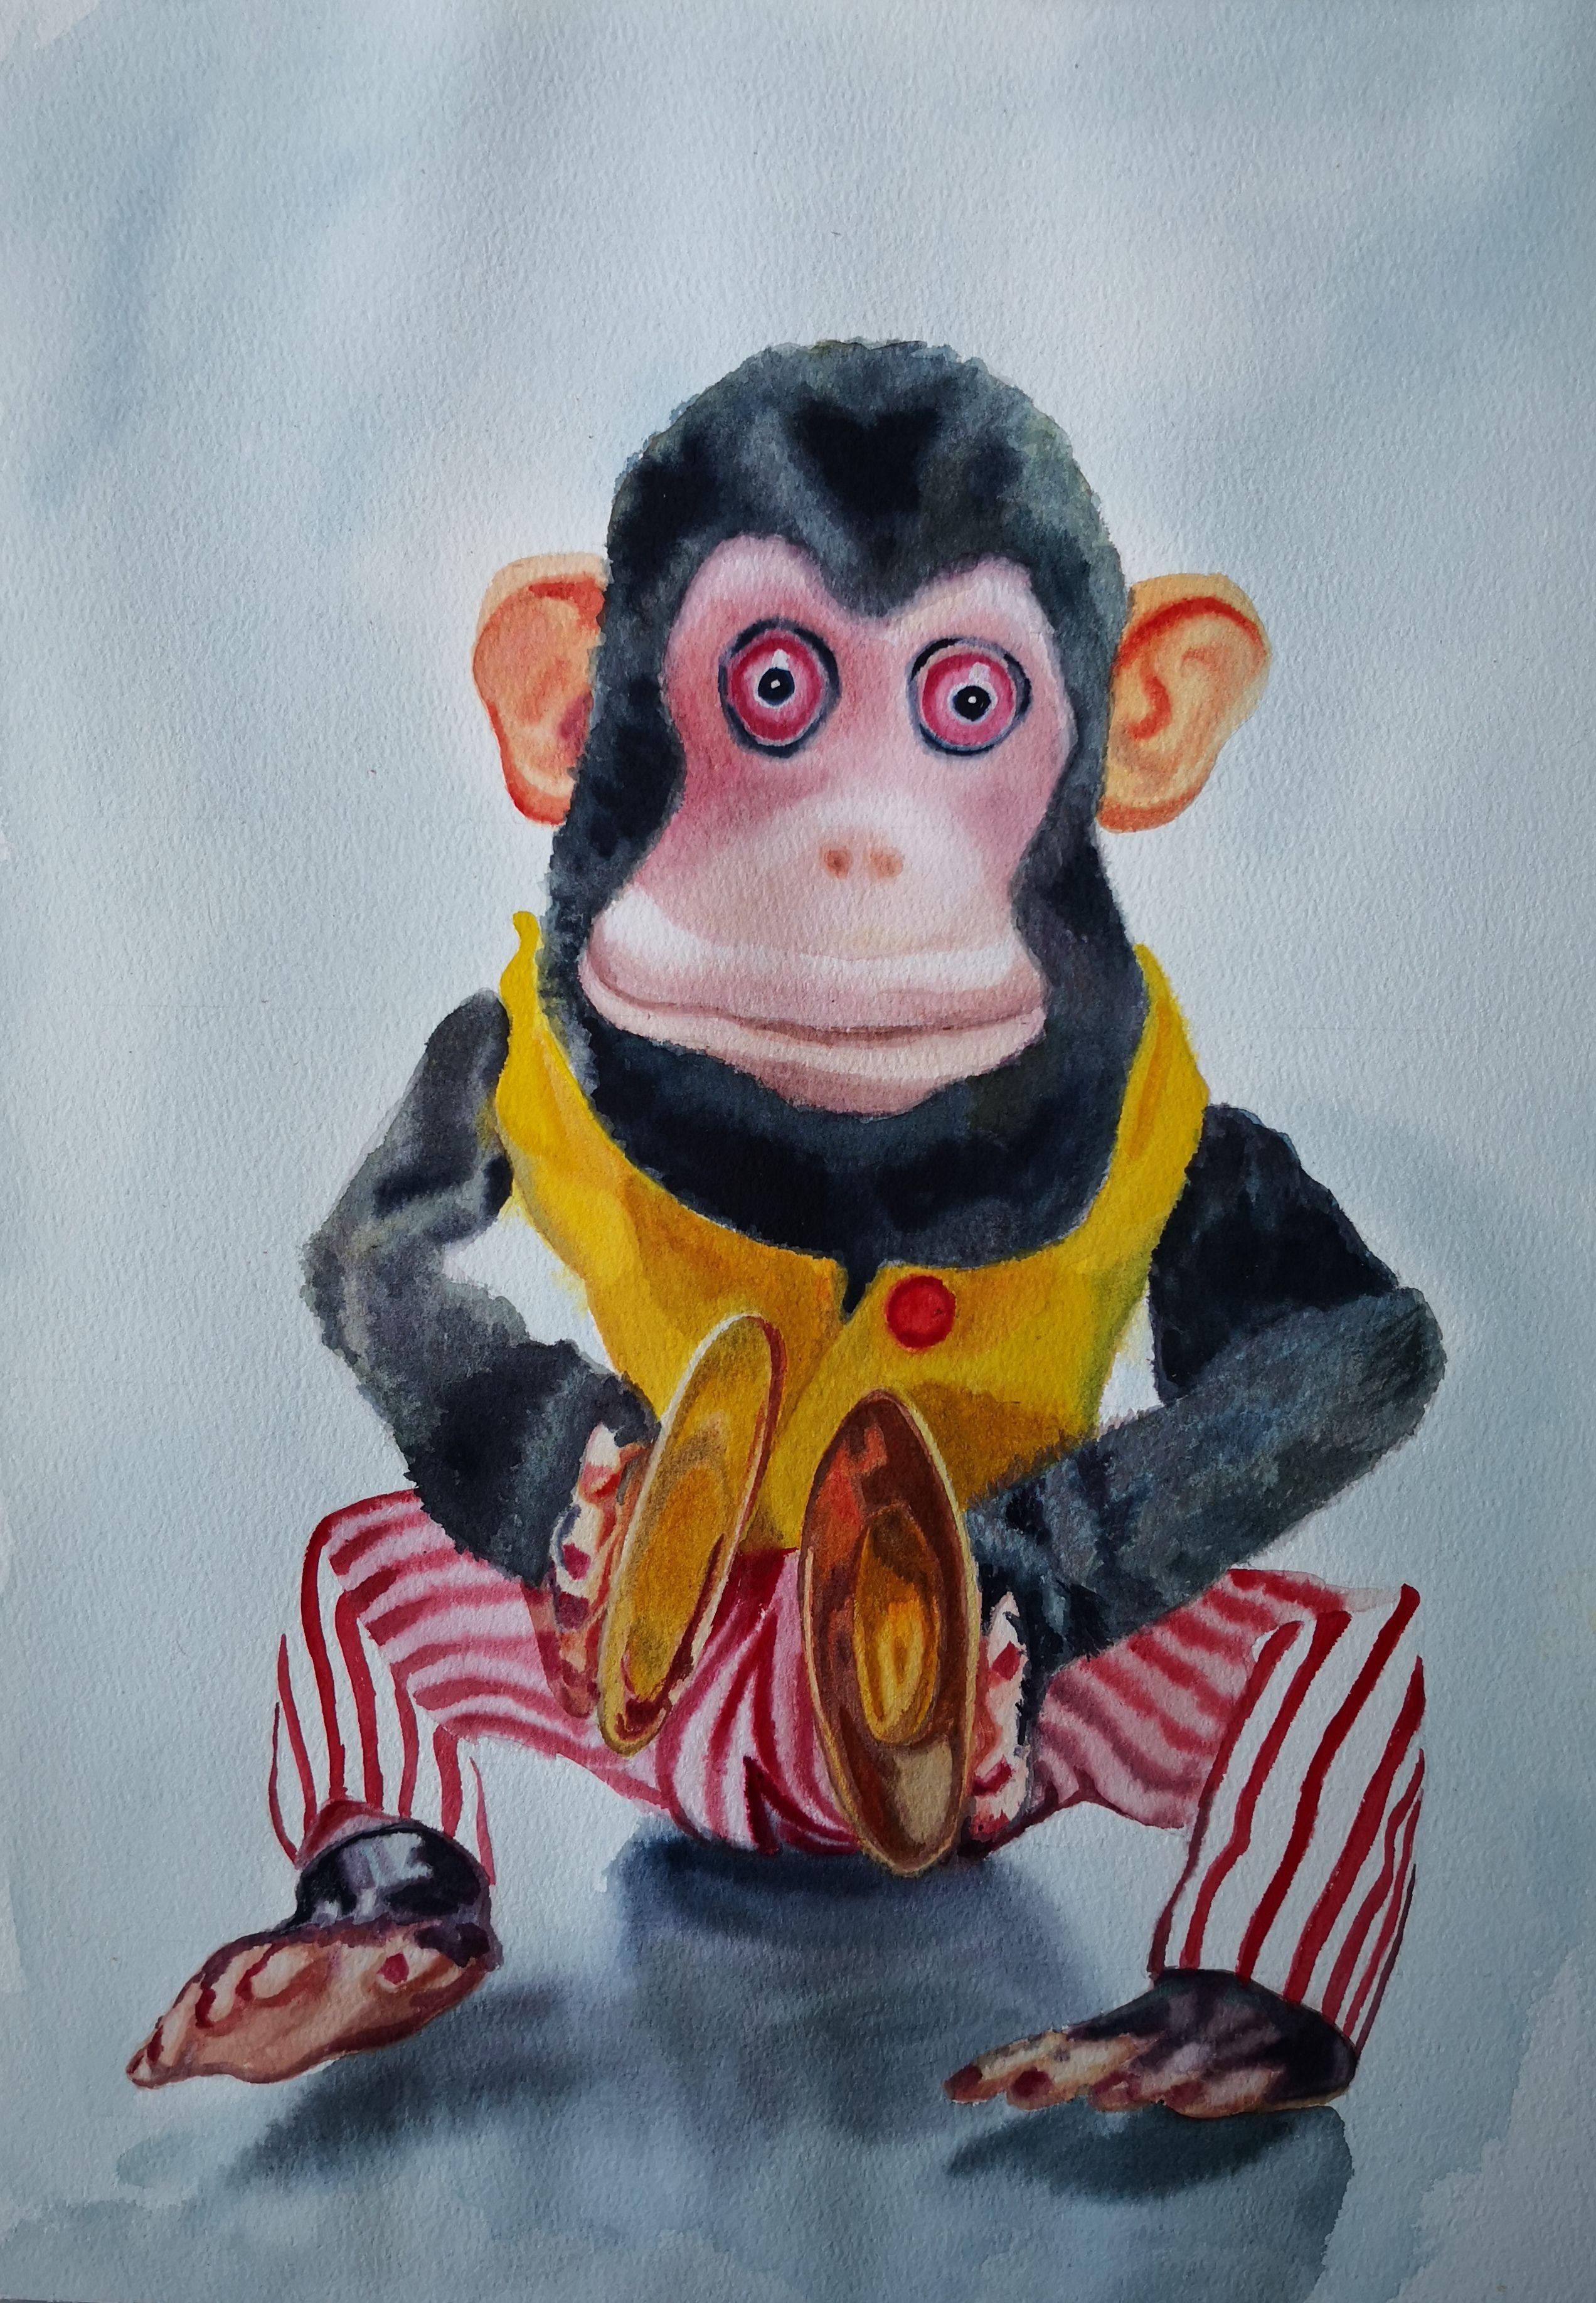 Monkey Toy, Painting, Watercolor on Paper - Art by Anyck Alvarez Kerloch